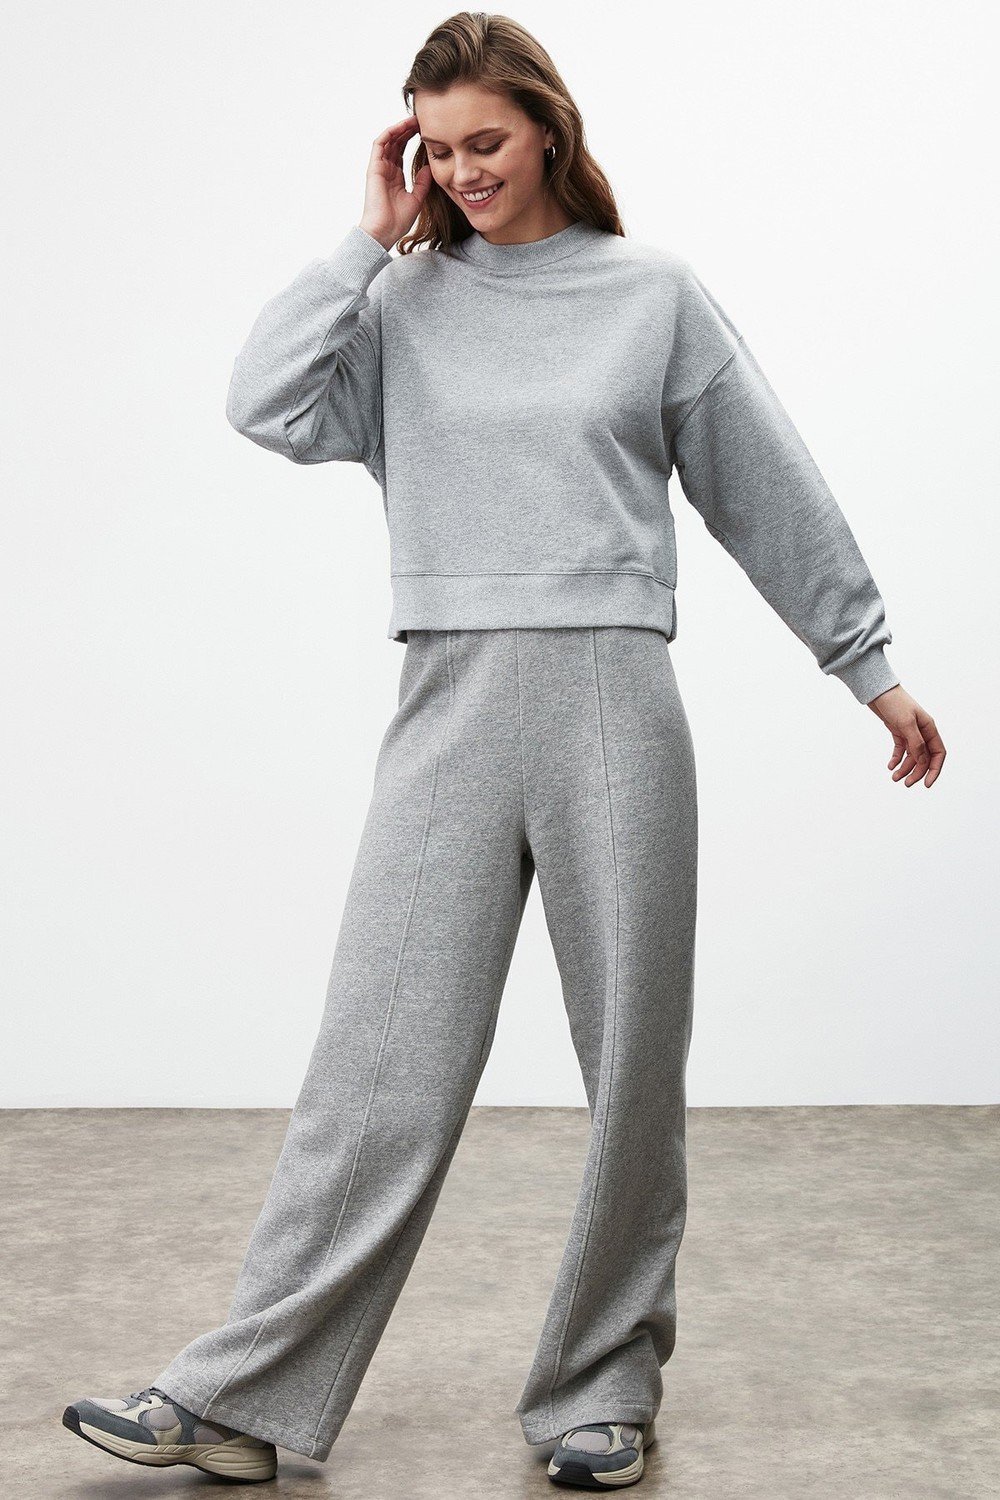 GRIMELANGE Sweatsuit - Grau - Relaxed fit